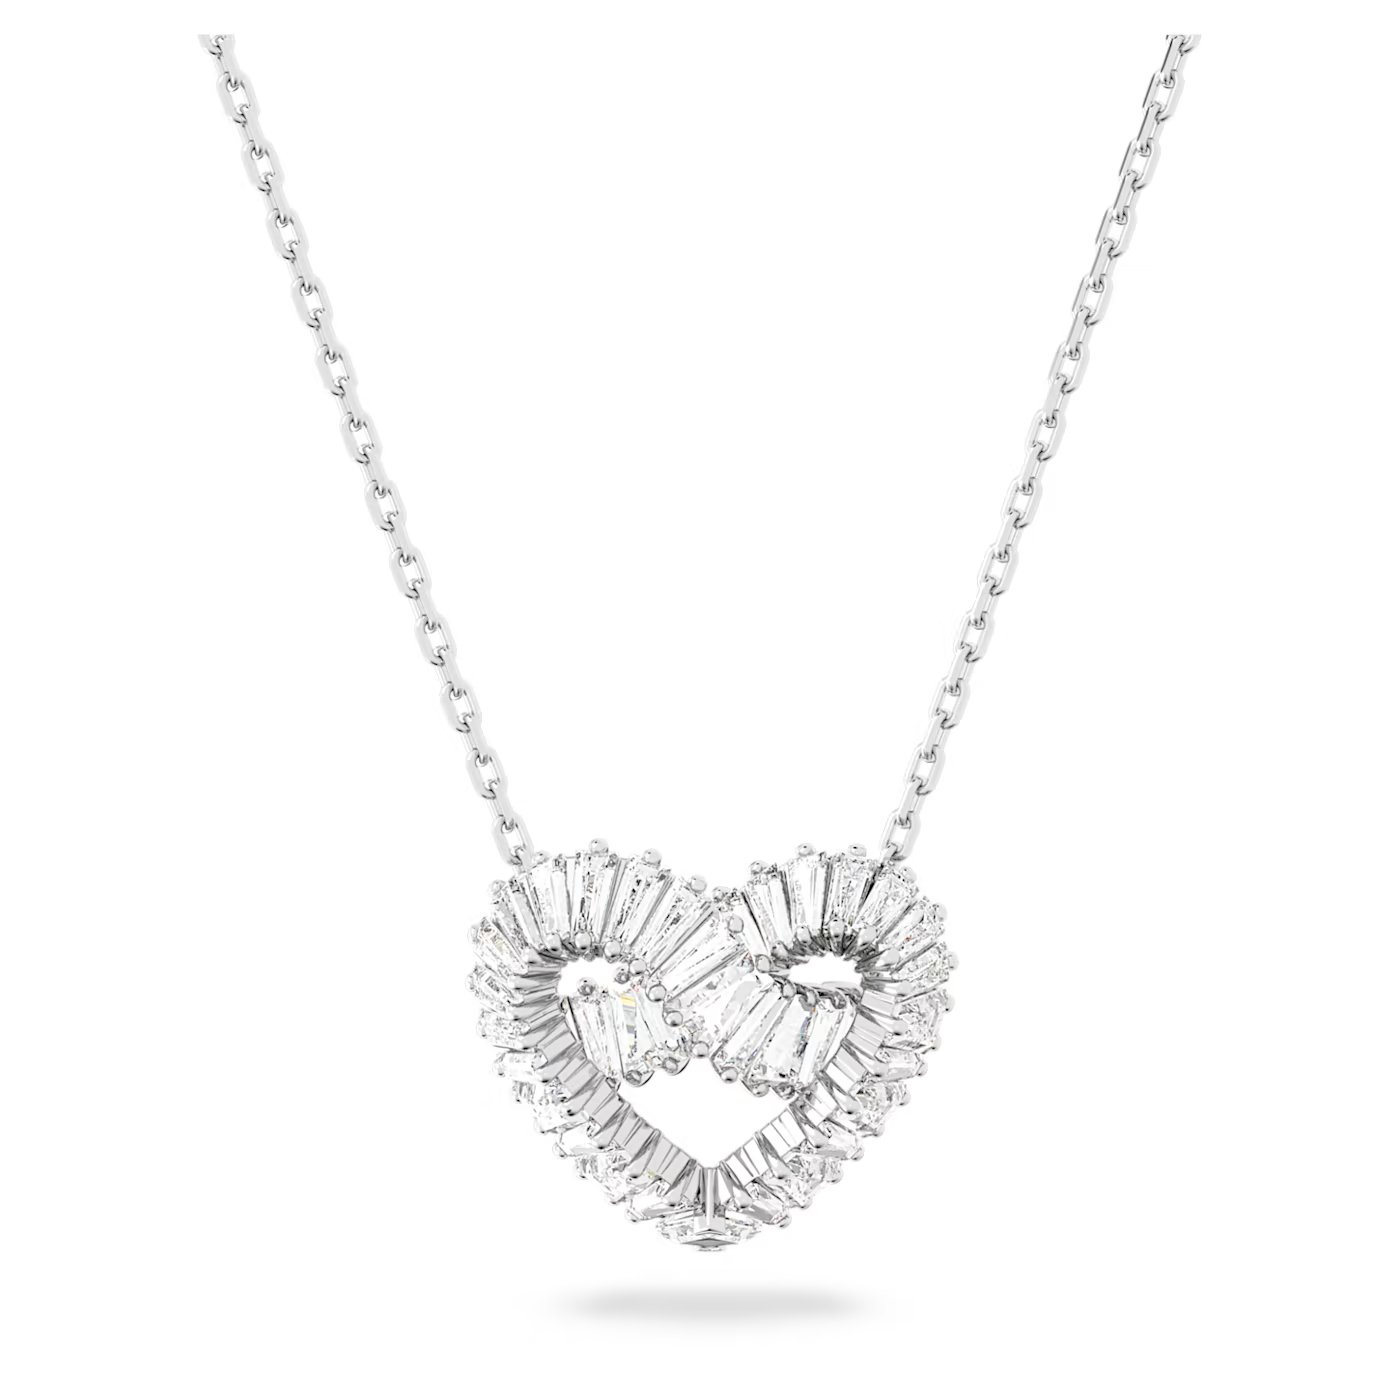 63c9a2a251cf2_matrix-pendant--mixed-cuts--heart--white--rhodium-plated-swarovski-5647924.jpg